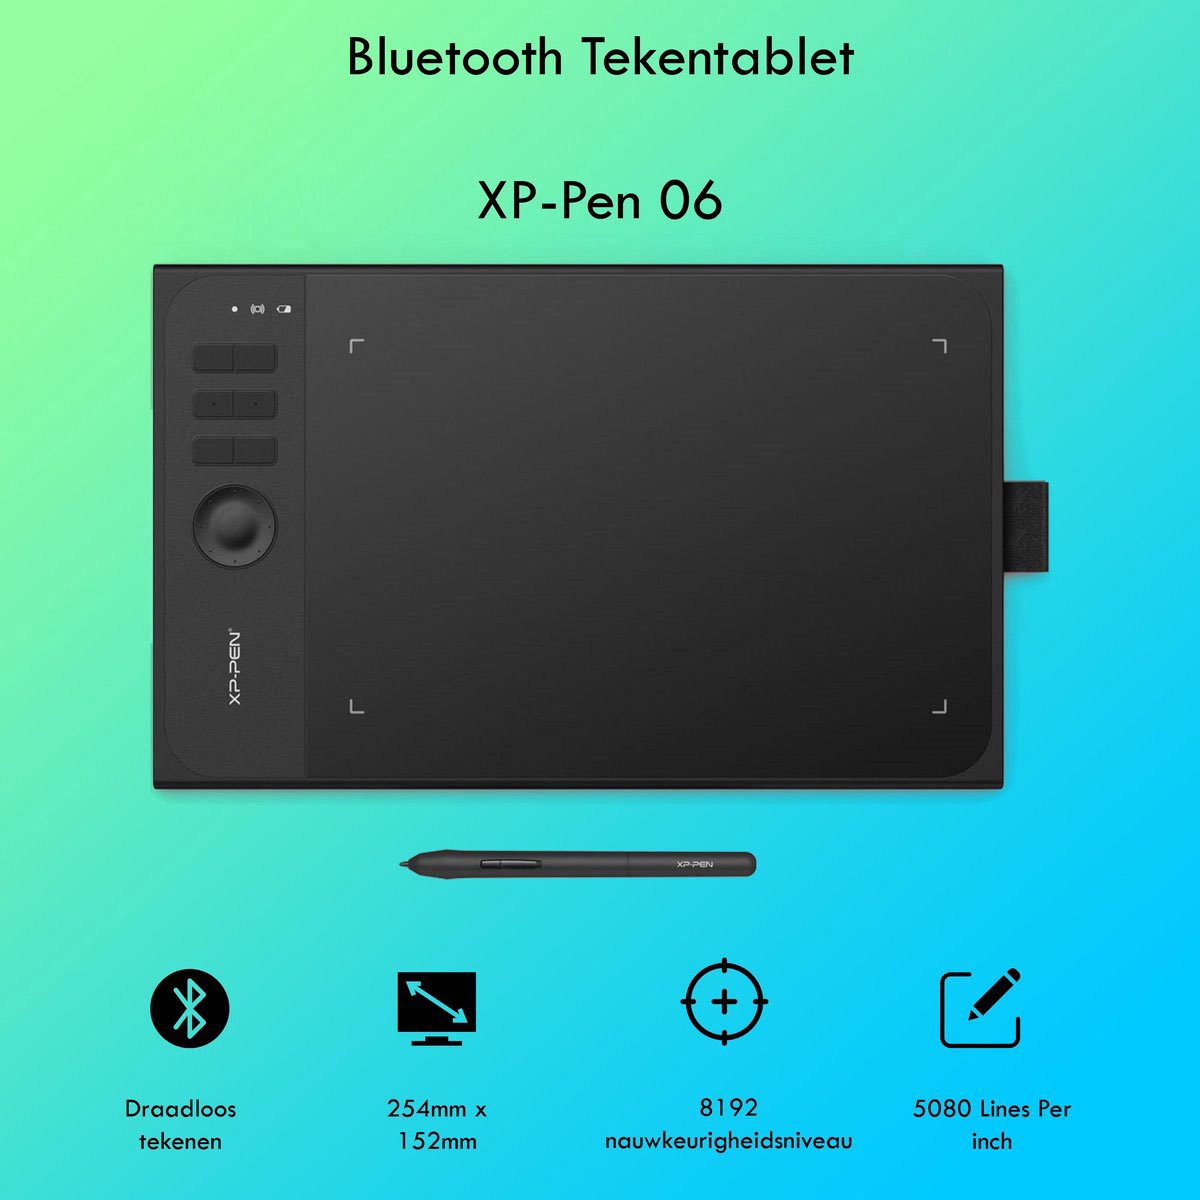 Teken Tablet - Tekentablet - Professioneel - 254mm x 152mm - 5080 LPI - Bluetooth